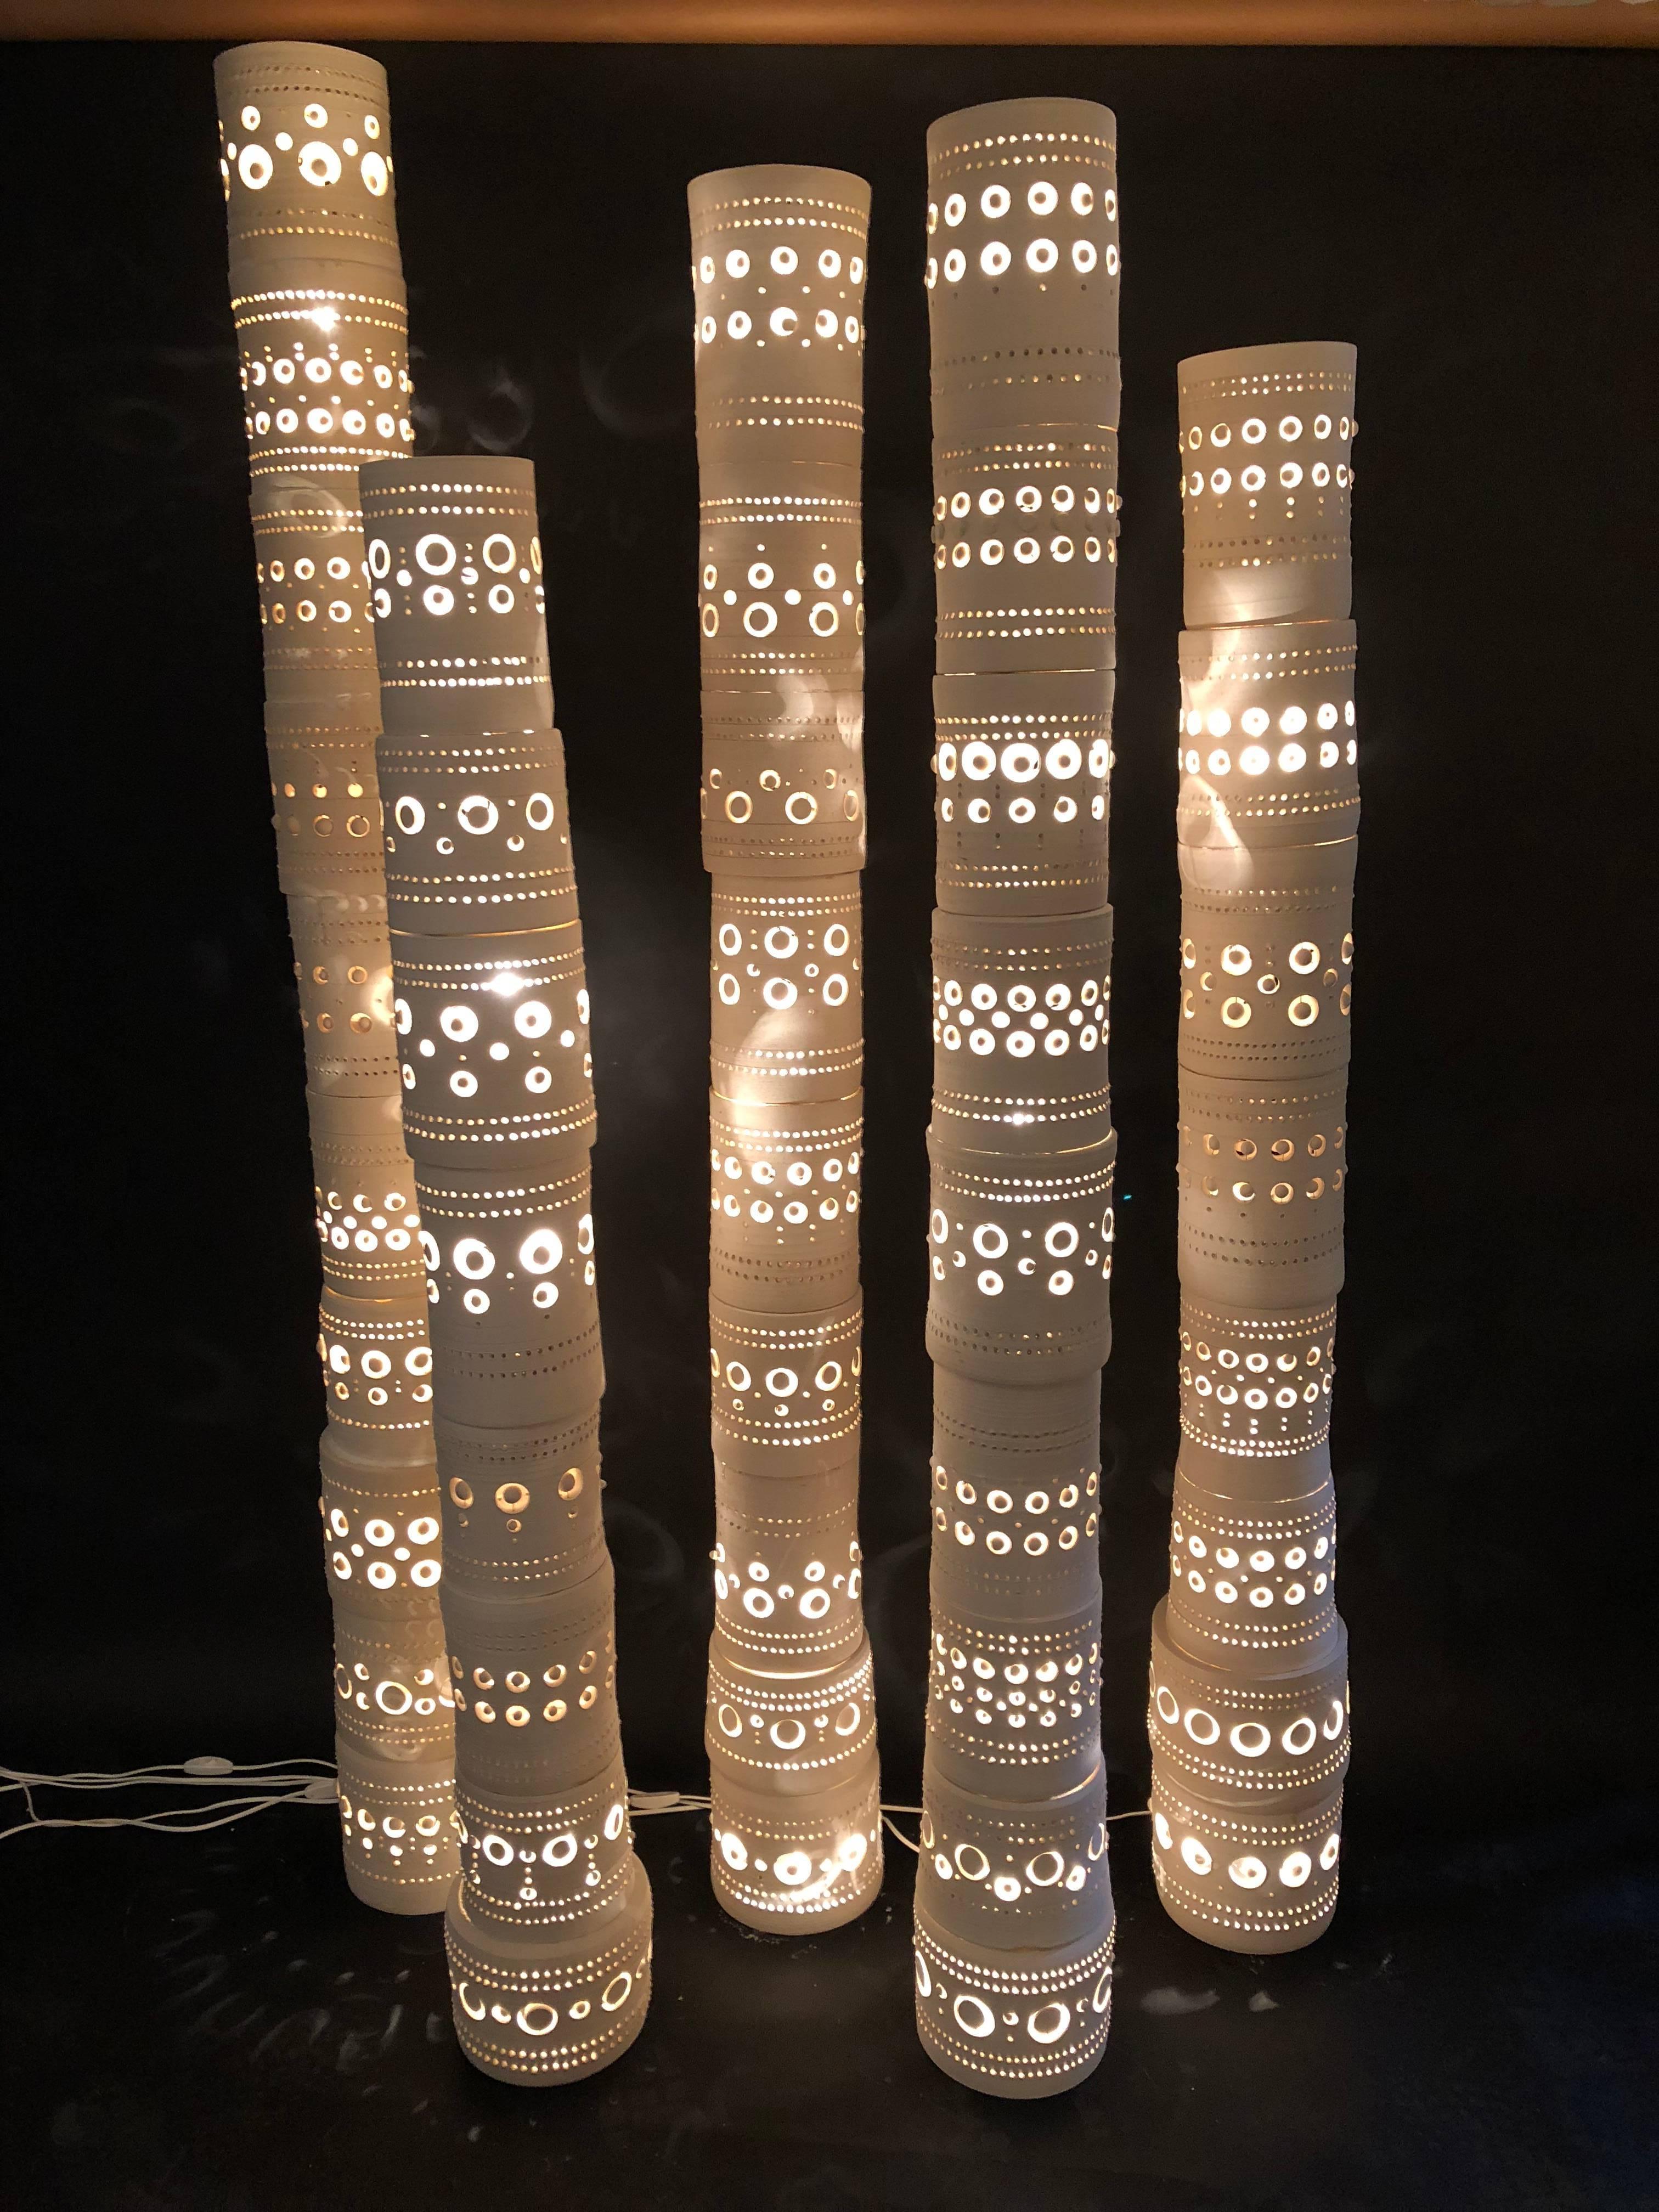 Georges Pelletier,
Set of five TOTEM lights,
Unglazed ceramic, signed,
circa 1970, France.
1/ Height 195 cm, diameter 27 cm (first on the left),
2/ Height 160 cm, diameter 25 cm (second o the left),
3/ Height 185 cm, diameter 20 cm (the one of